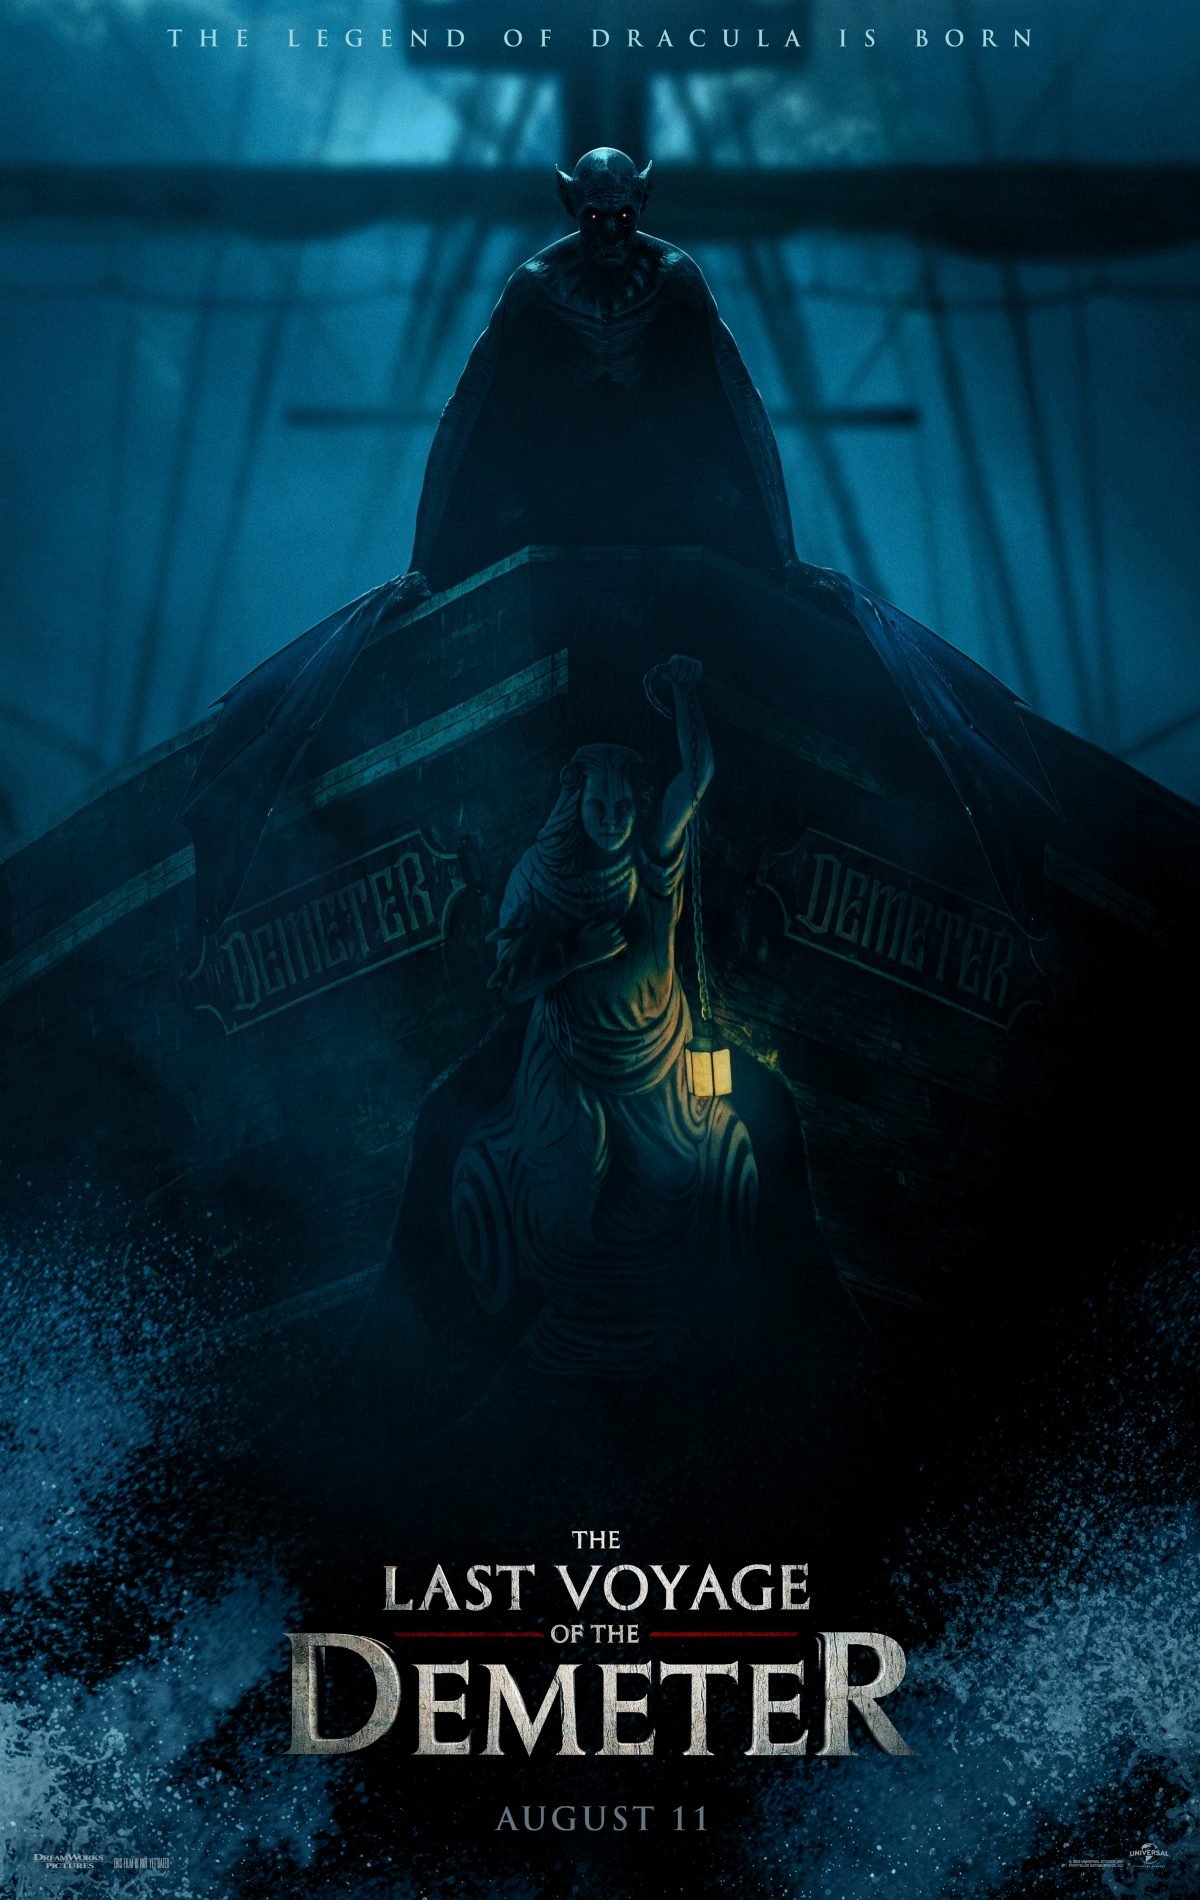 The Last Voyage of Demeter dracula movie at sea poster